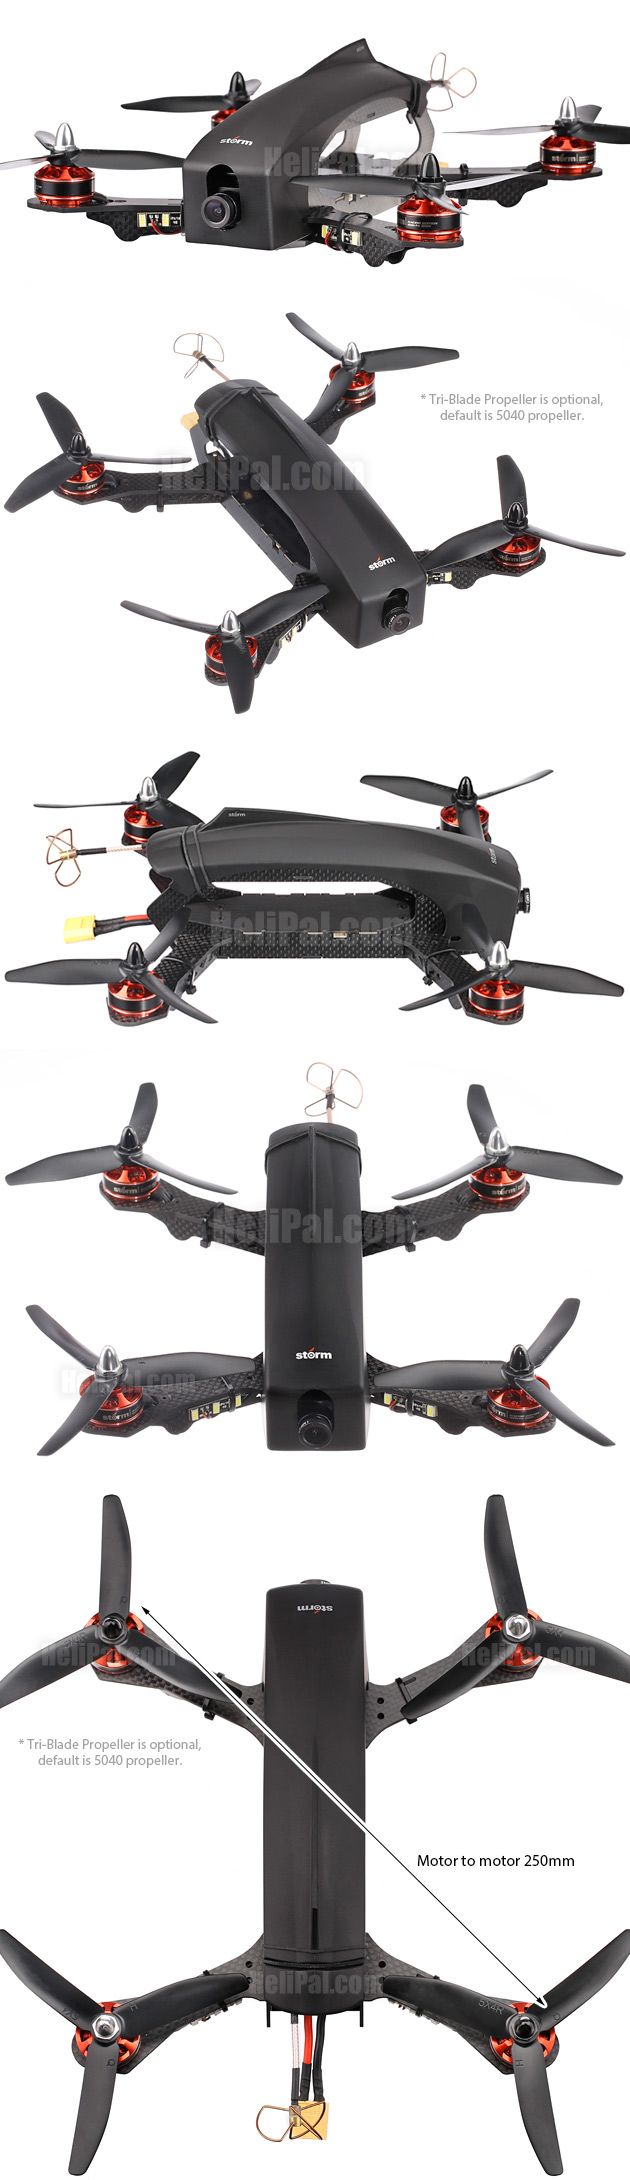 STORM Racing Drone (RTF / Kylin 250 Storm Edition) www.helipal.com/...